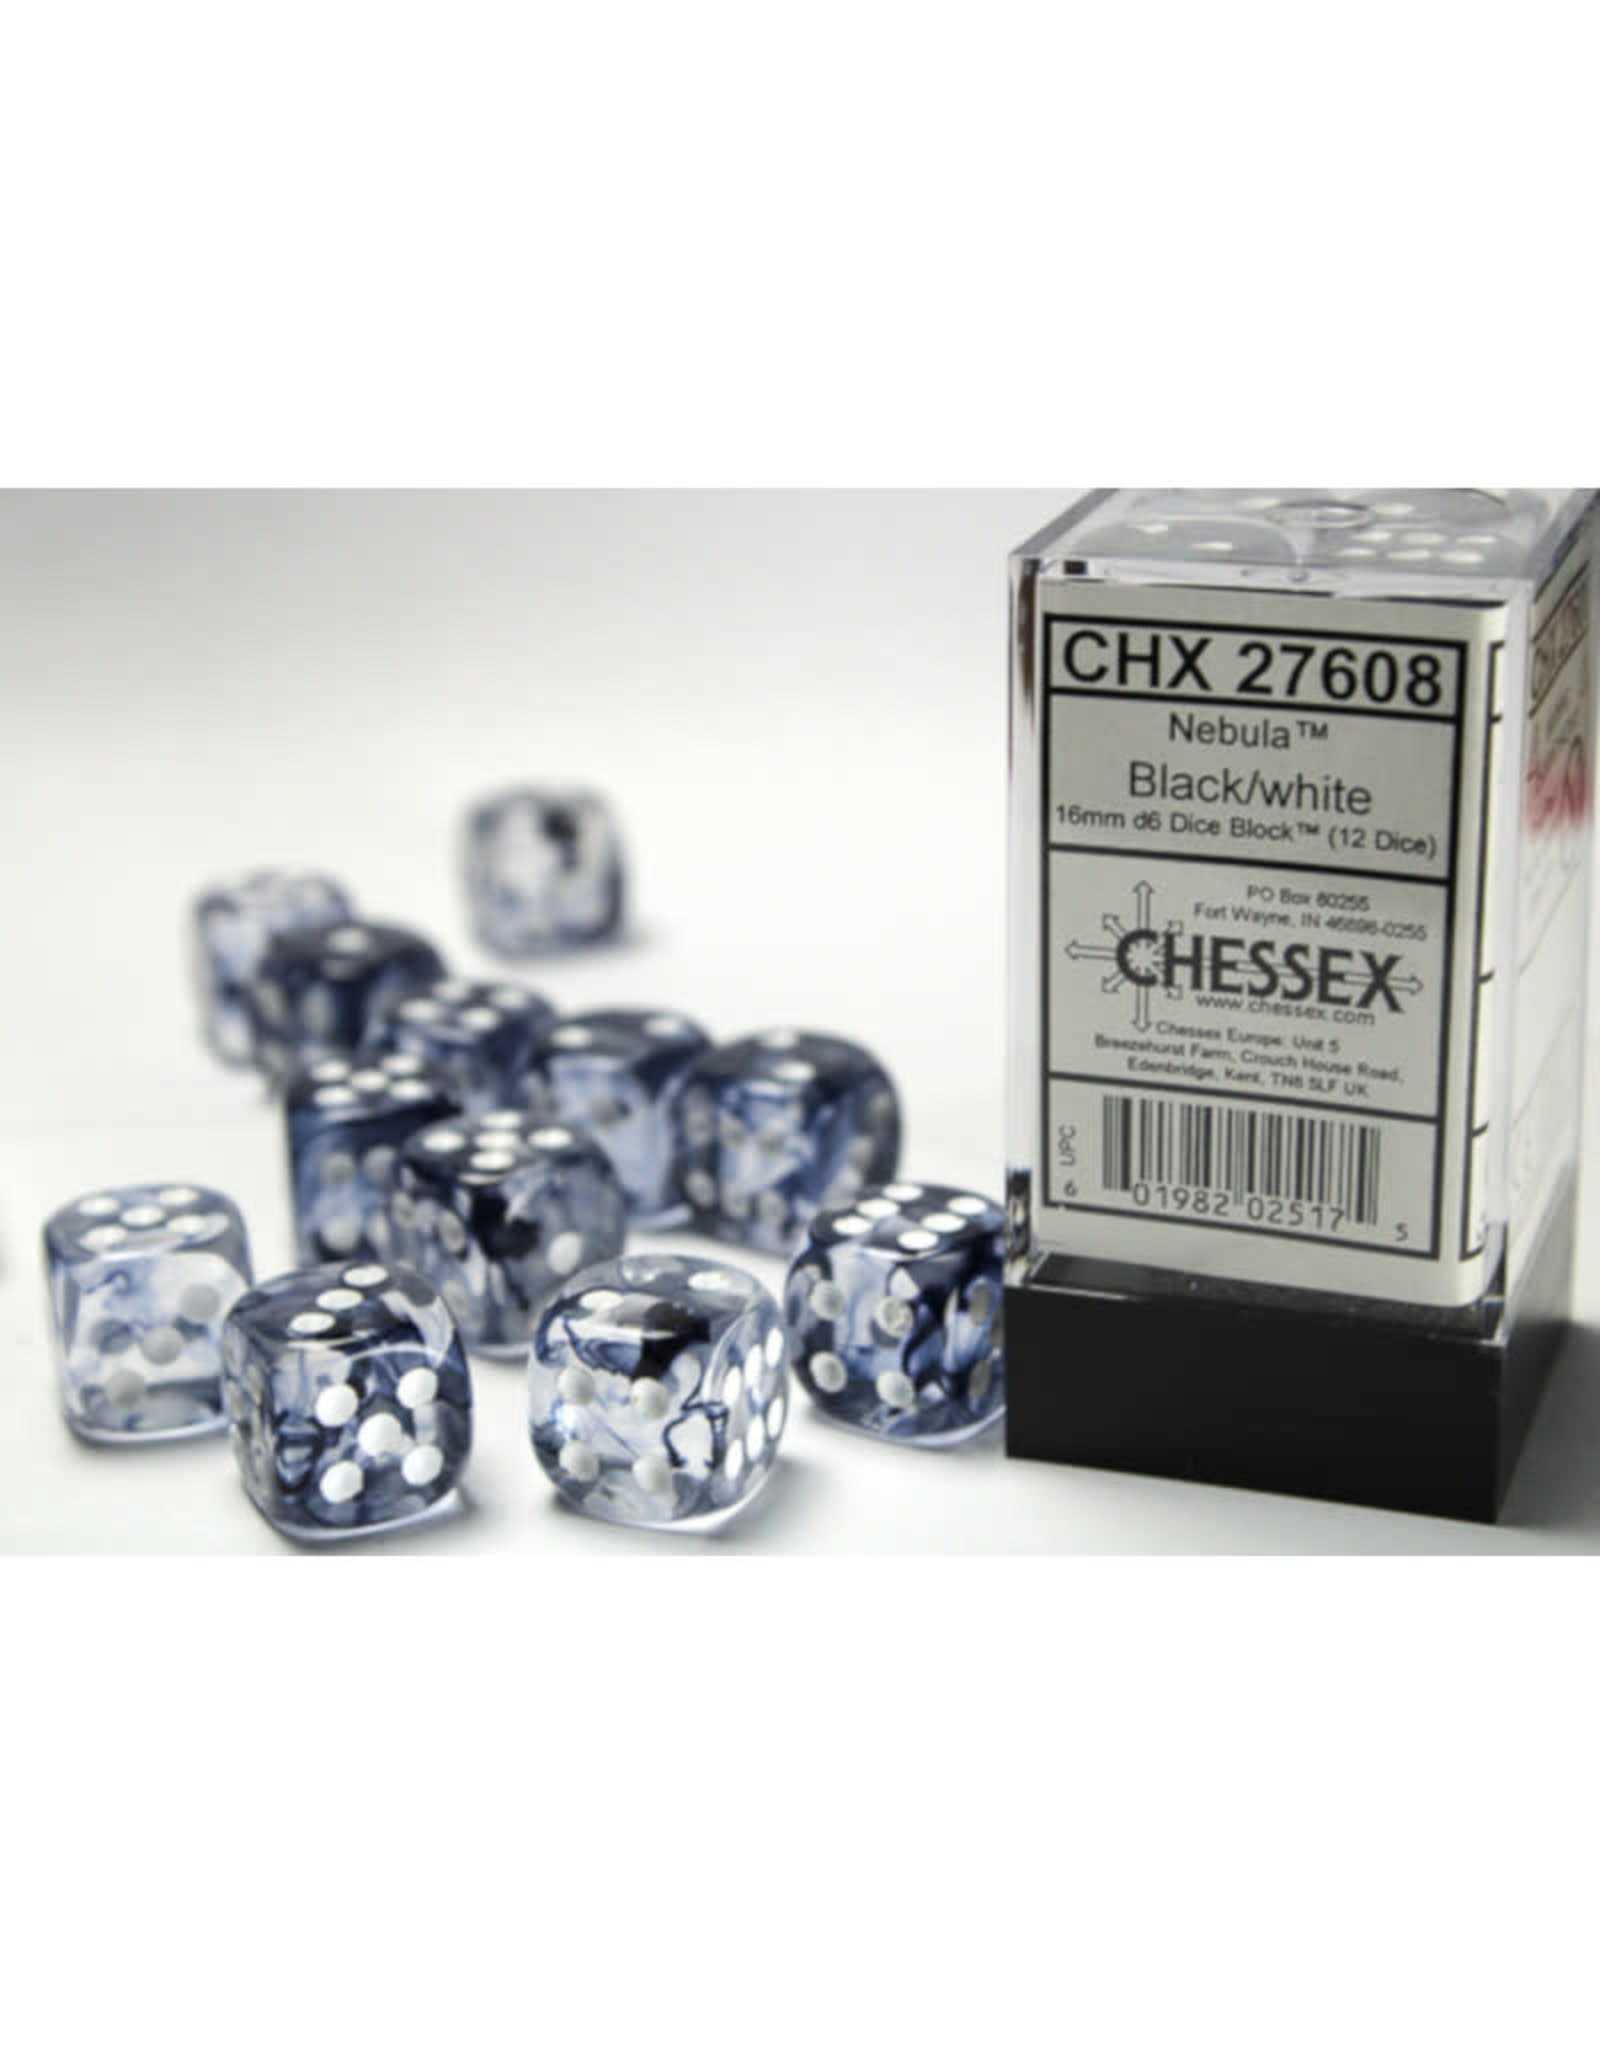 Chessex CHX27608 Nebula: 16mm D6 Black/White Block (12)